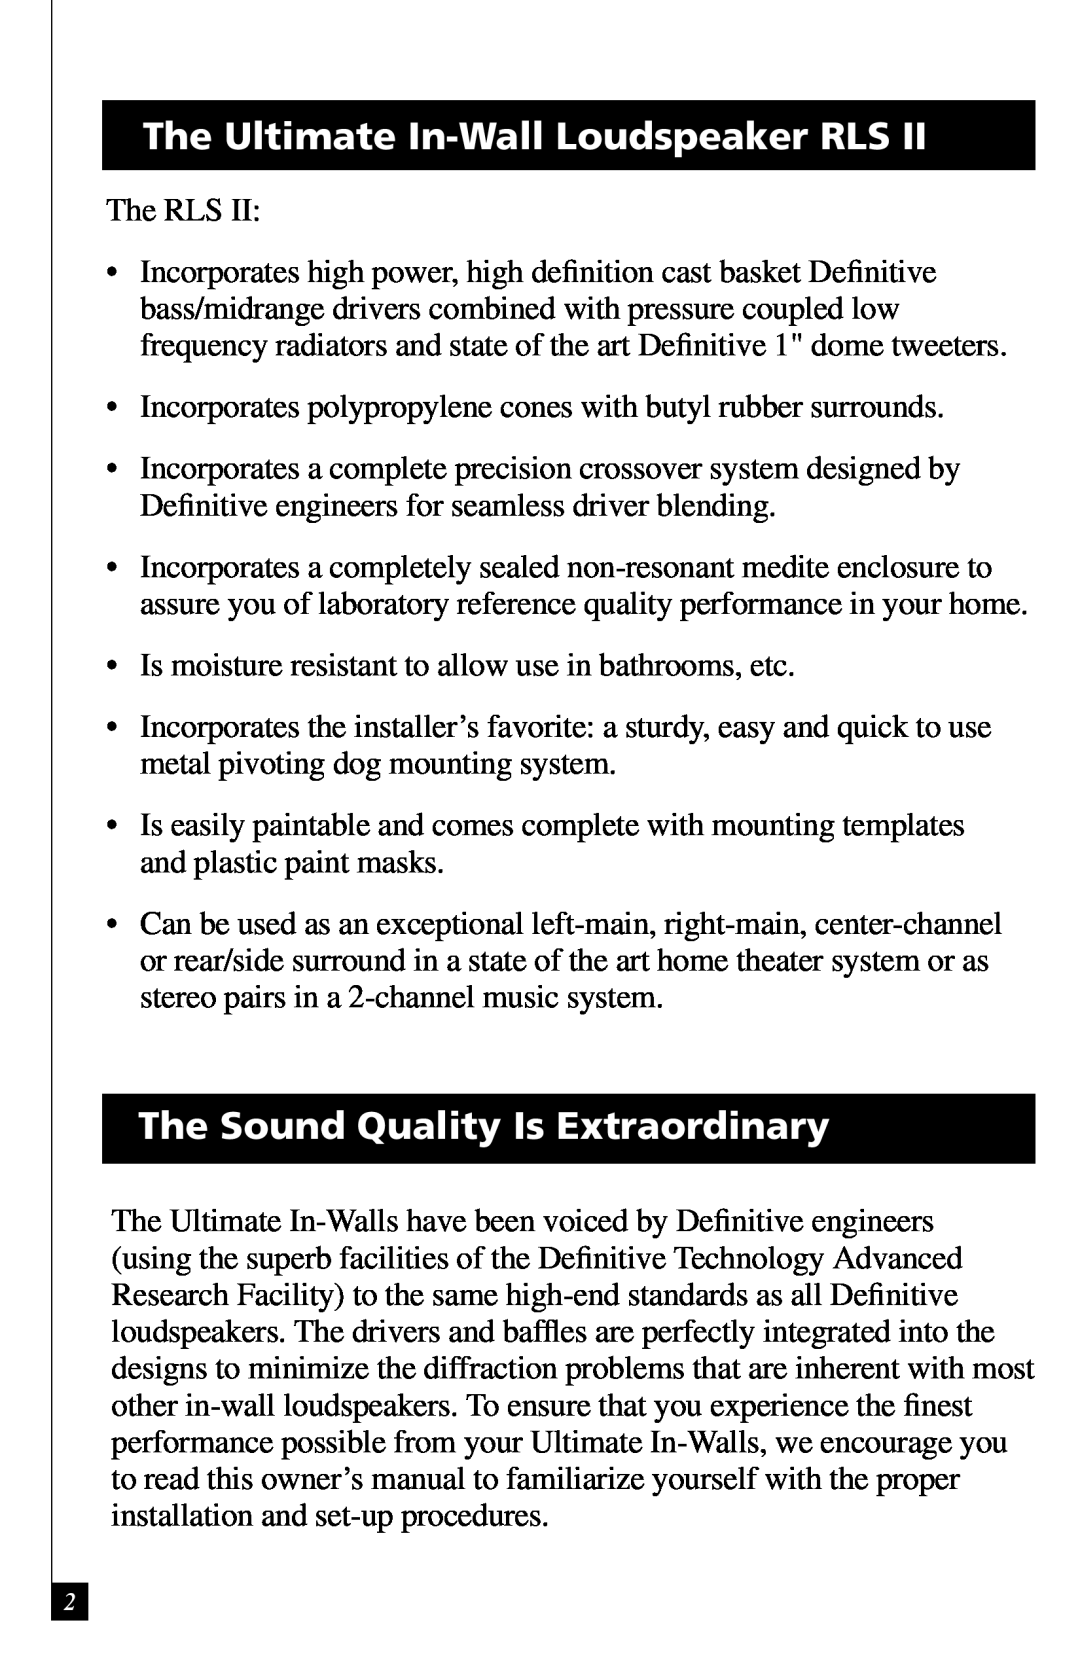 Definitive Technology RLS II, In-Wall Loudspeaker The Ultimate In-WallLoudspeaker RLS, The Sound Quality Is Extraordinary 